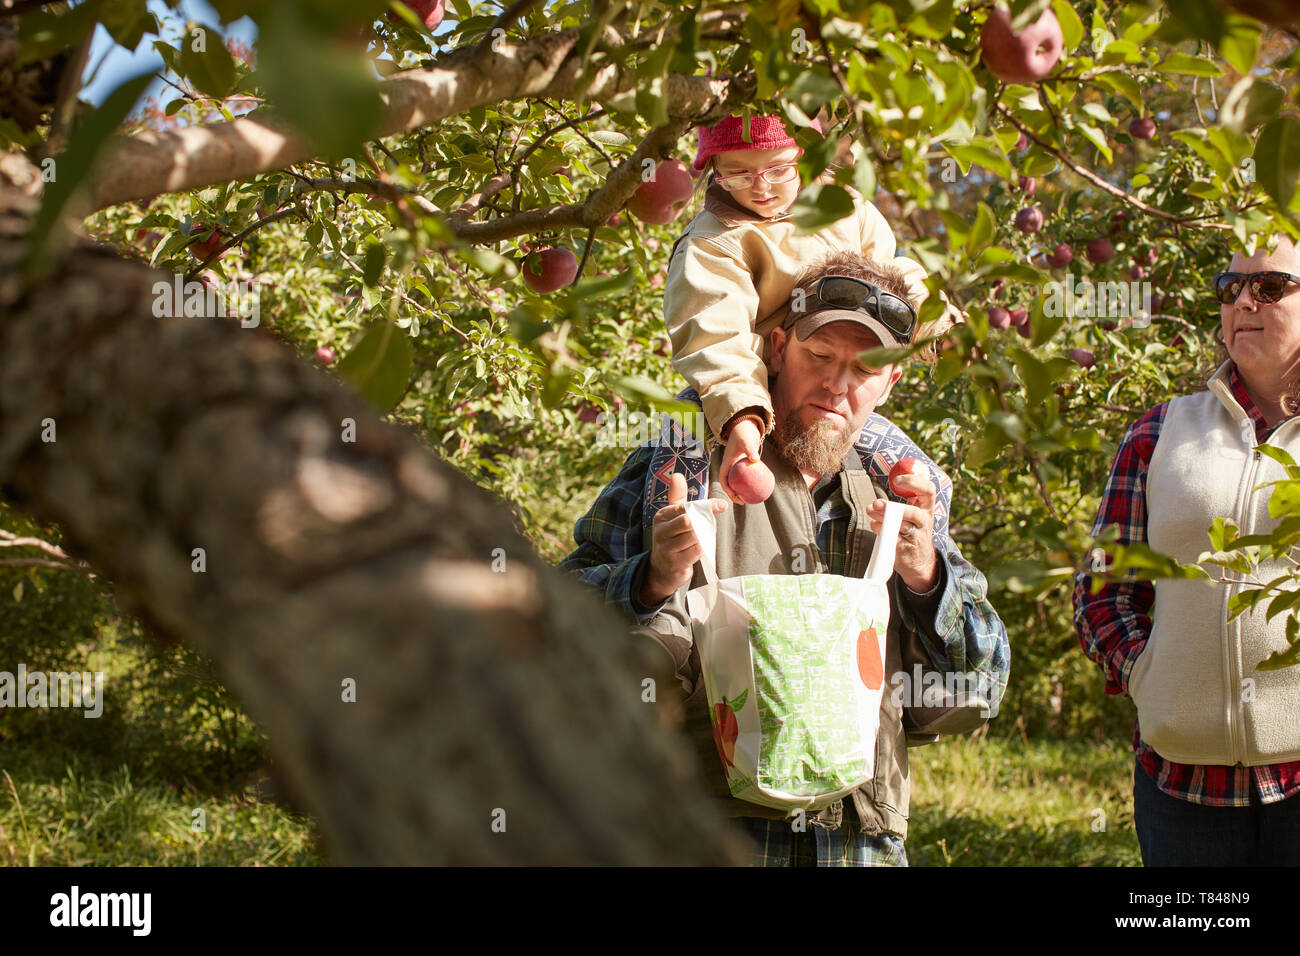 Padre e hija recogiendo manzanas del árbol Foto de stock